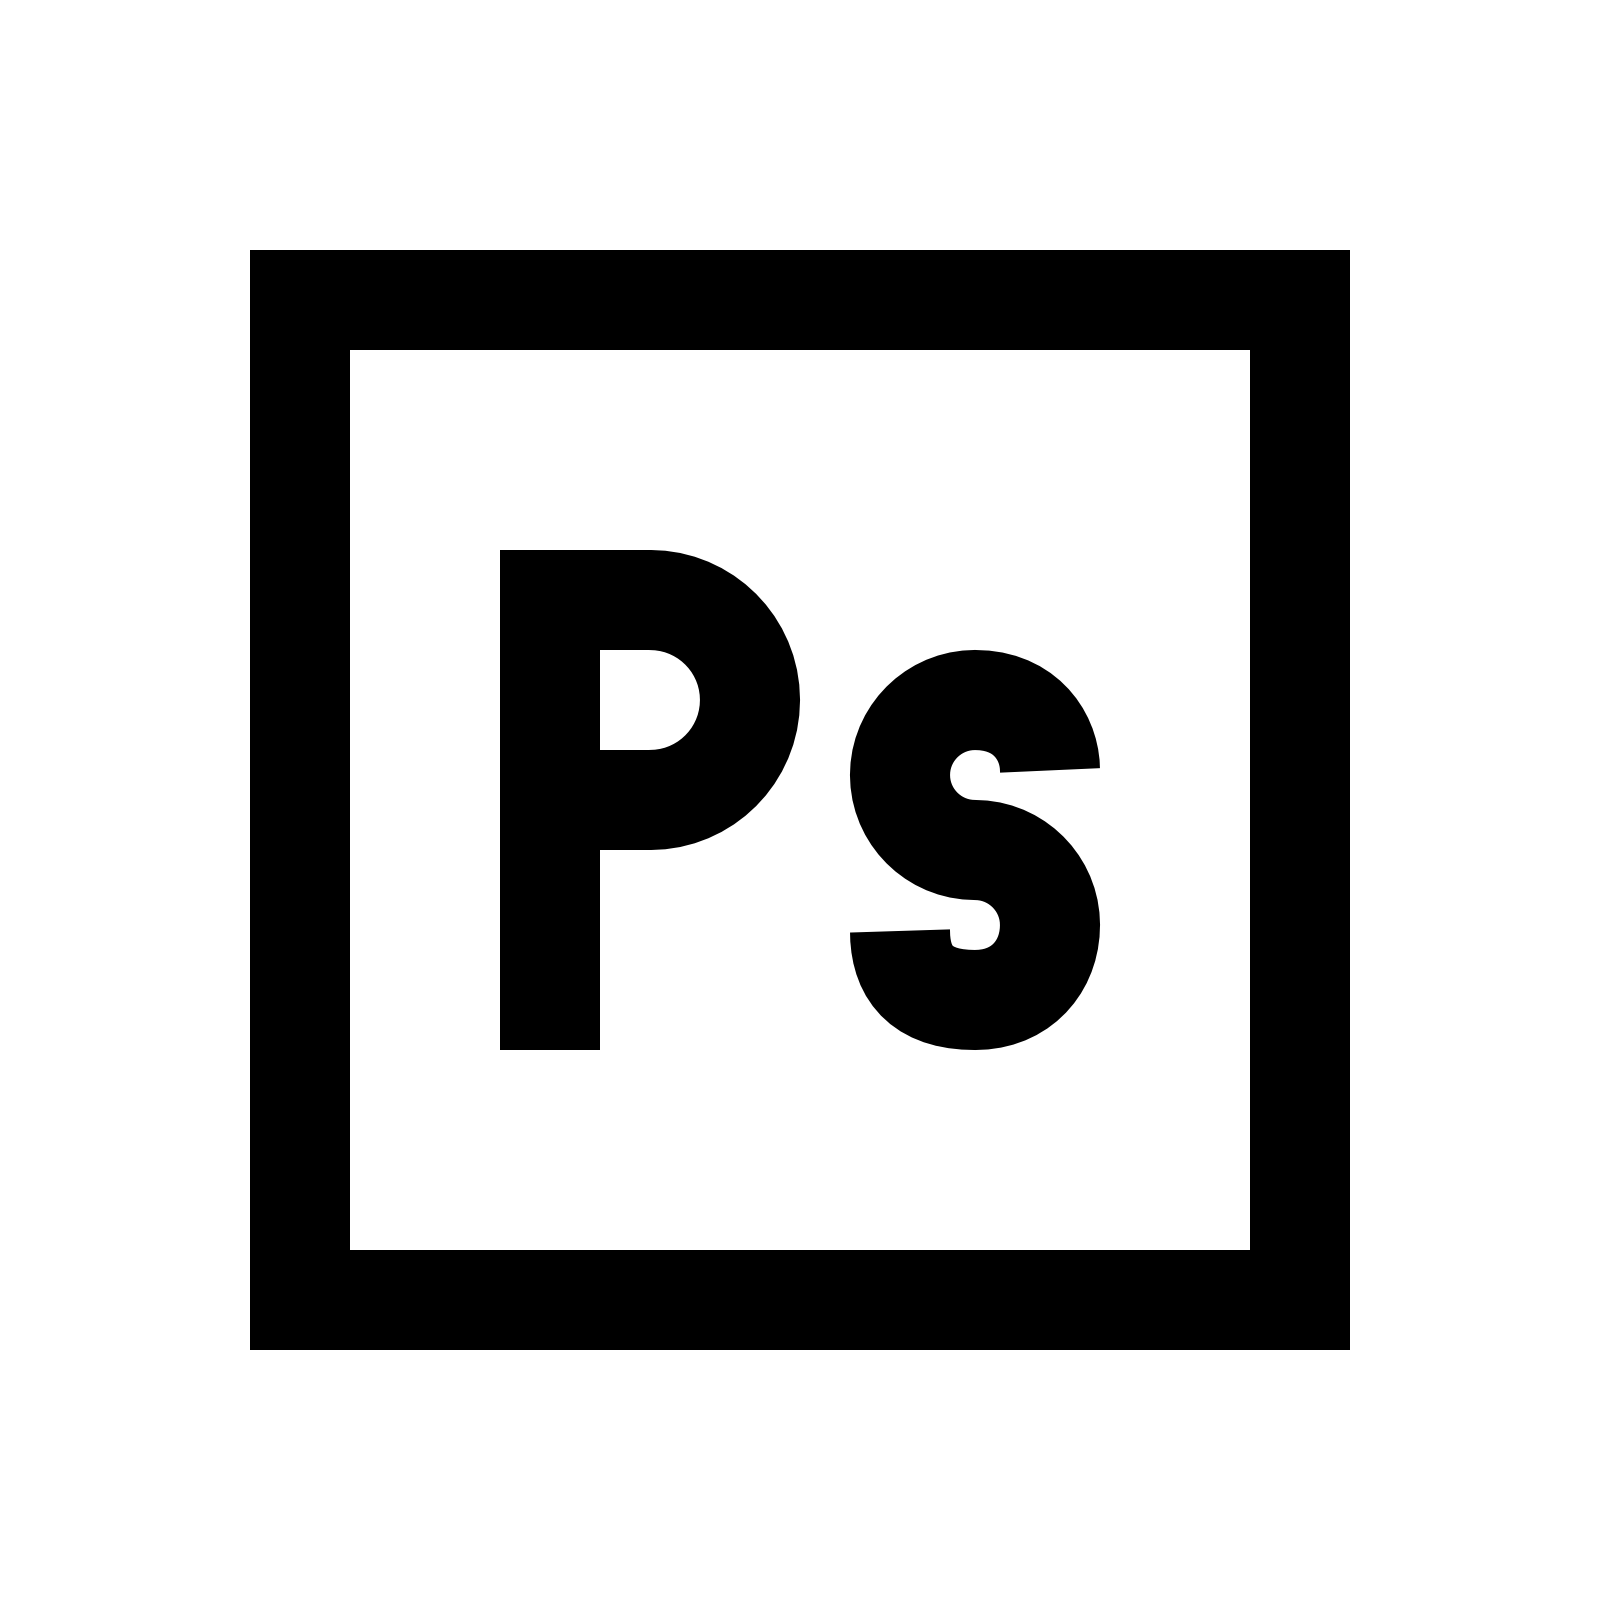 PS Logo Transparent Image